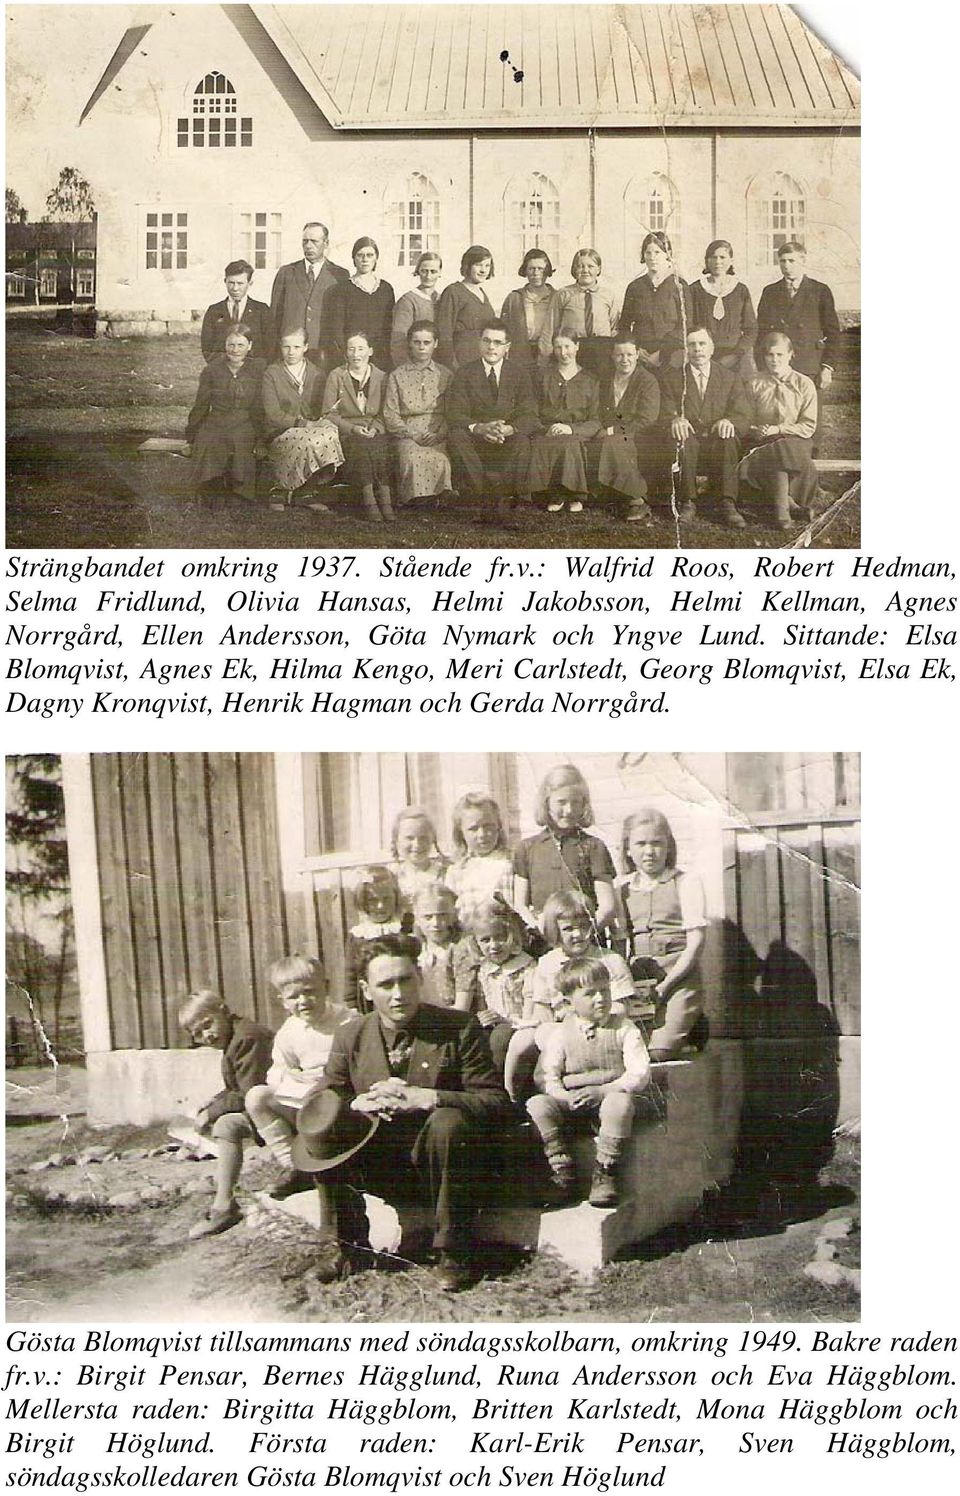 Sittande: Elsa Blomqvist, Agnes Ek, Hilma Kengo, Meri Carlstedt, Georg Blomqvist, Elsa Ek, Dagny Kronqvist, Henrik Hagman och Gerda Norrgård.